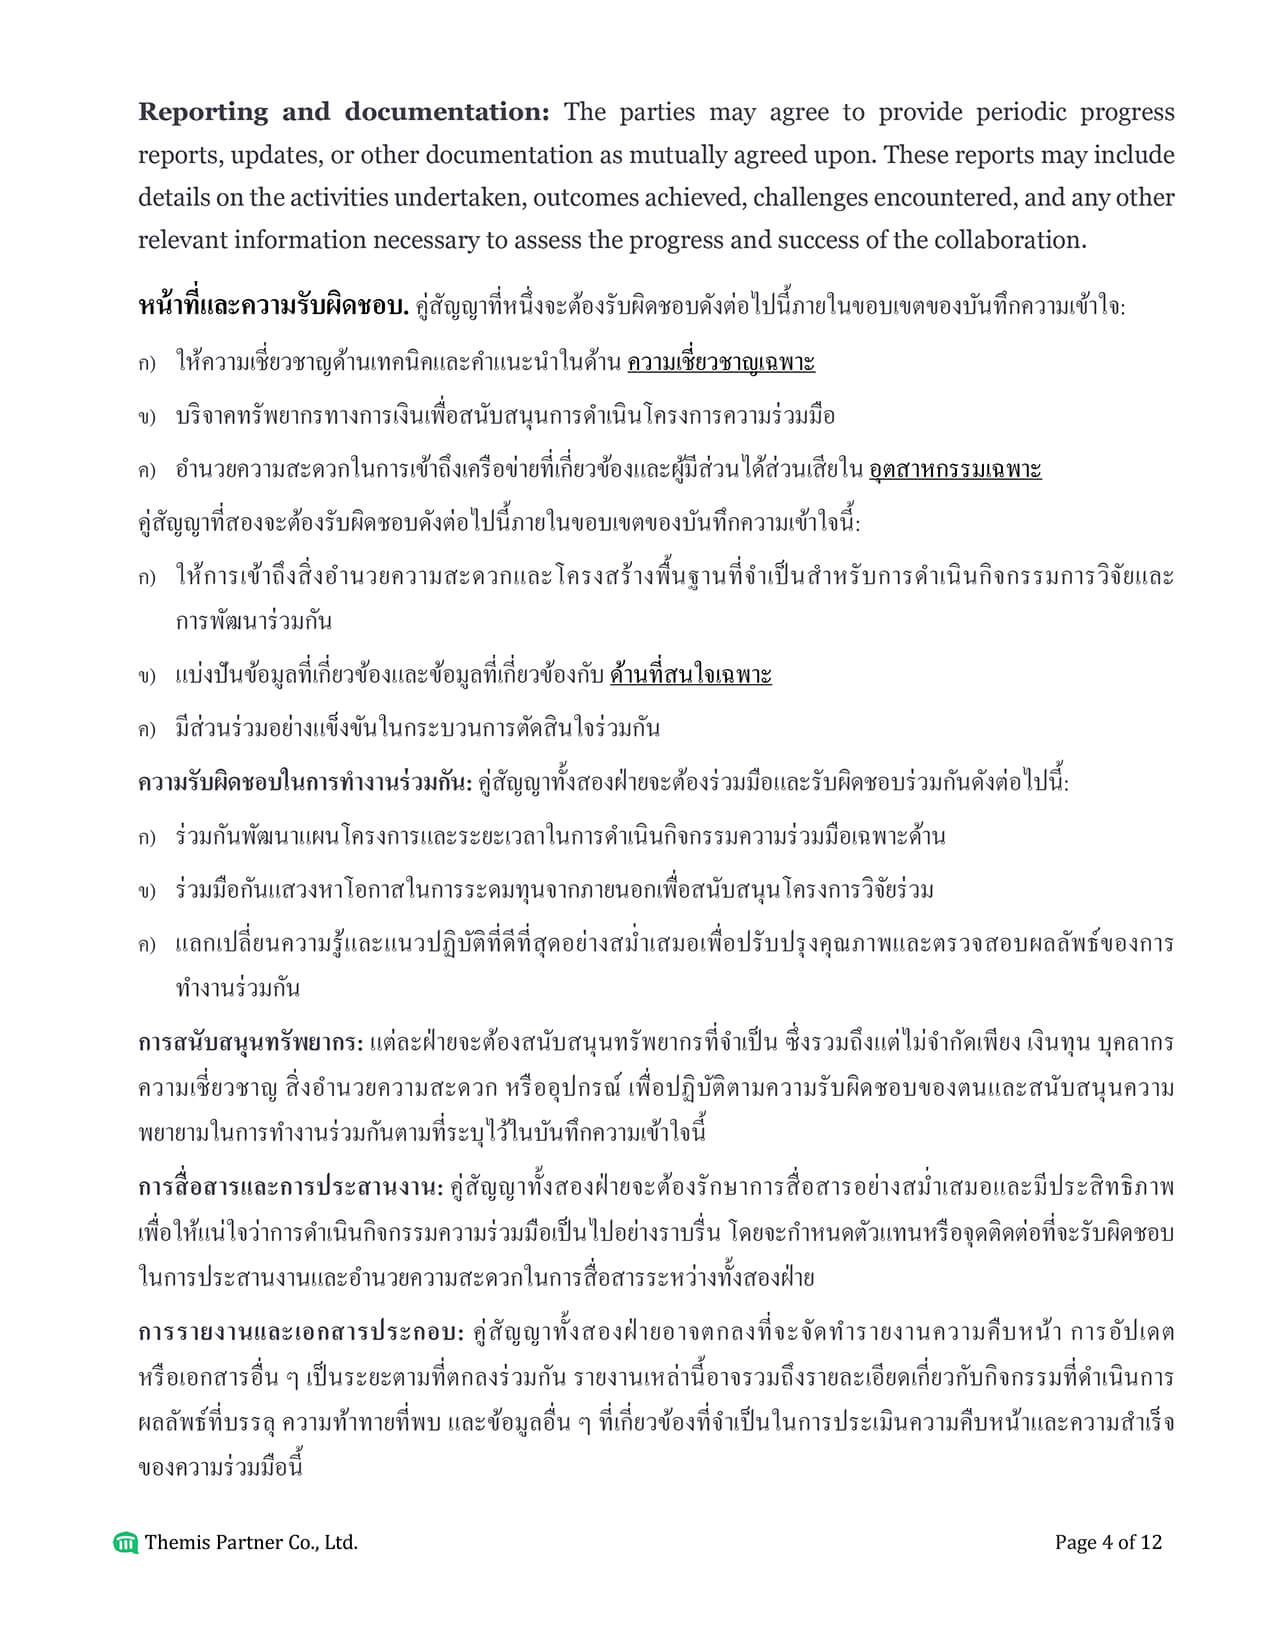 Memorandum of understanding Thailand 4